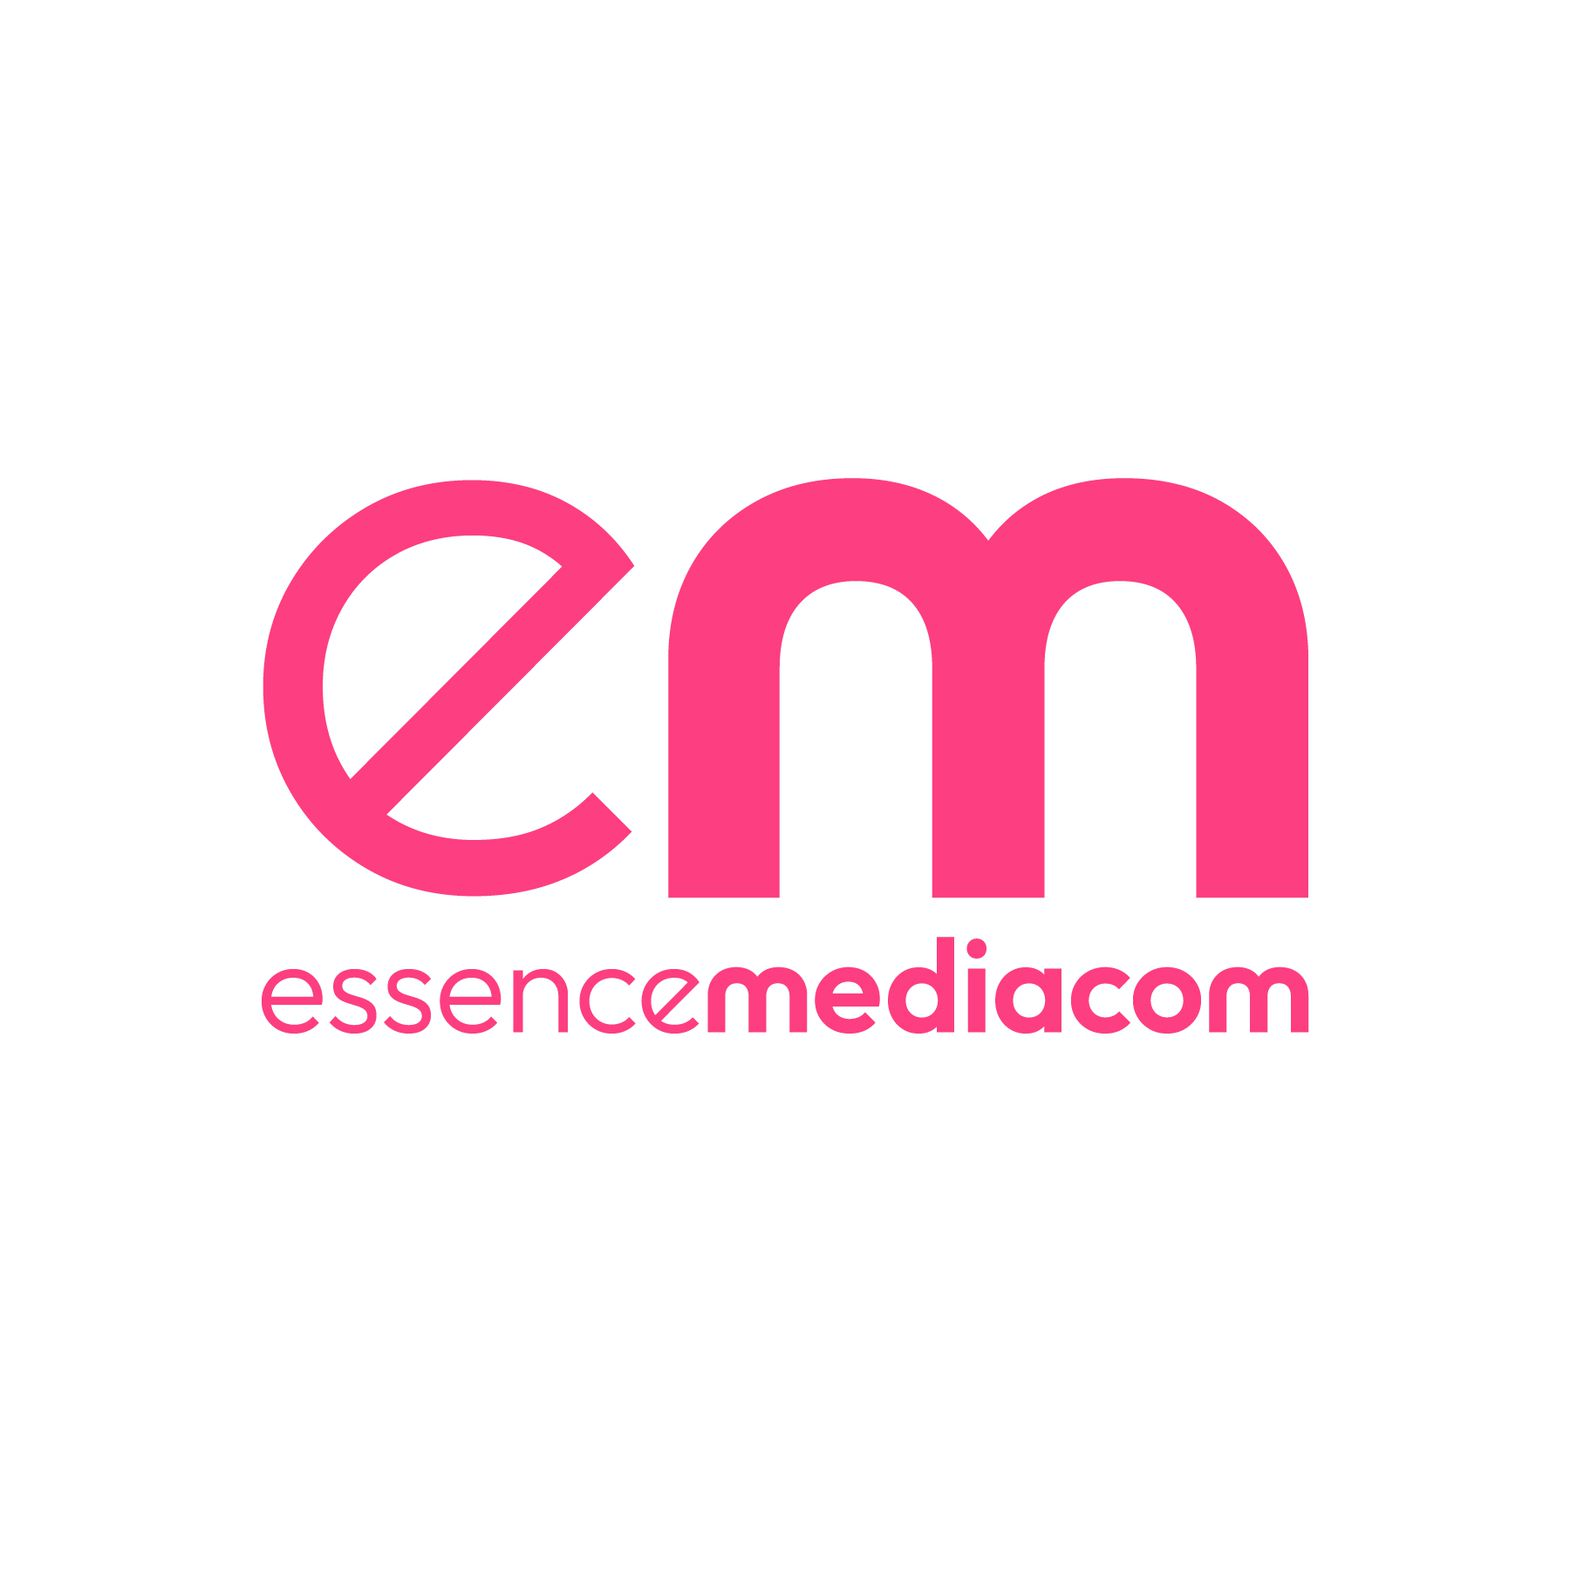 selects MediaCom as new global media agency